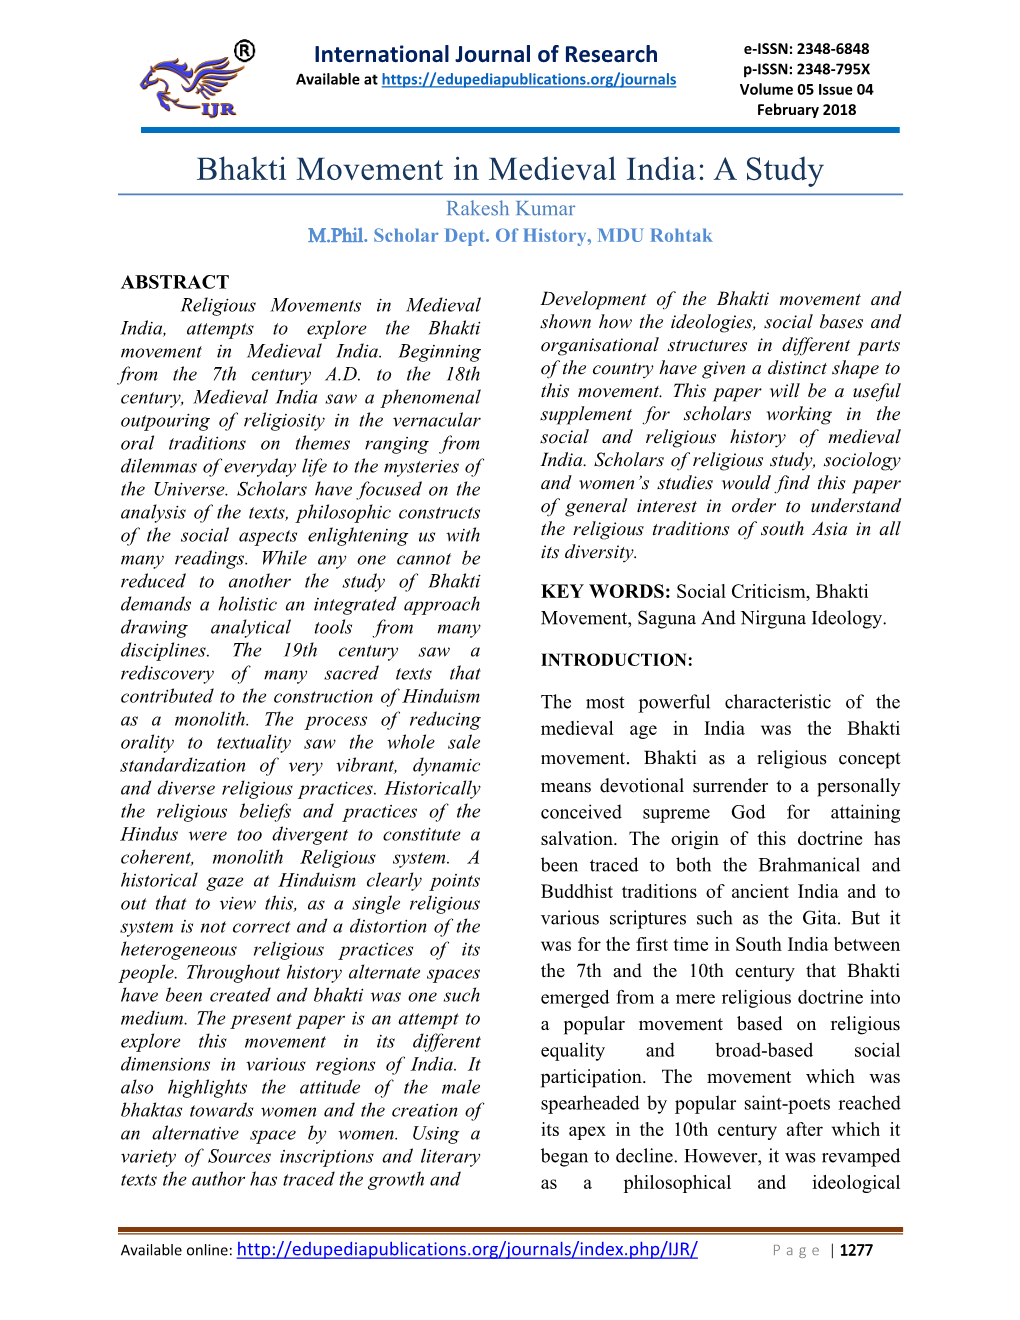 Bhakti Movement in Medieval India: a Study Rakesh Kumar M.Phil